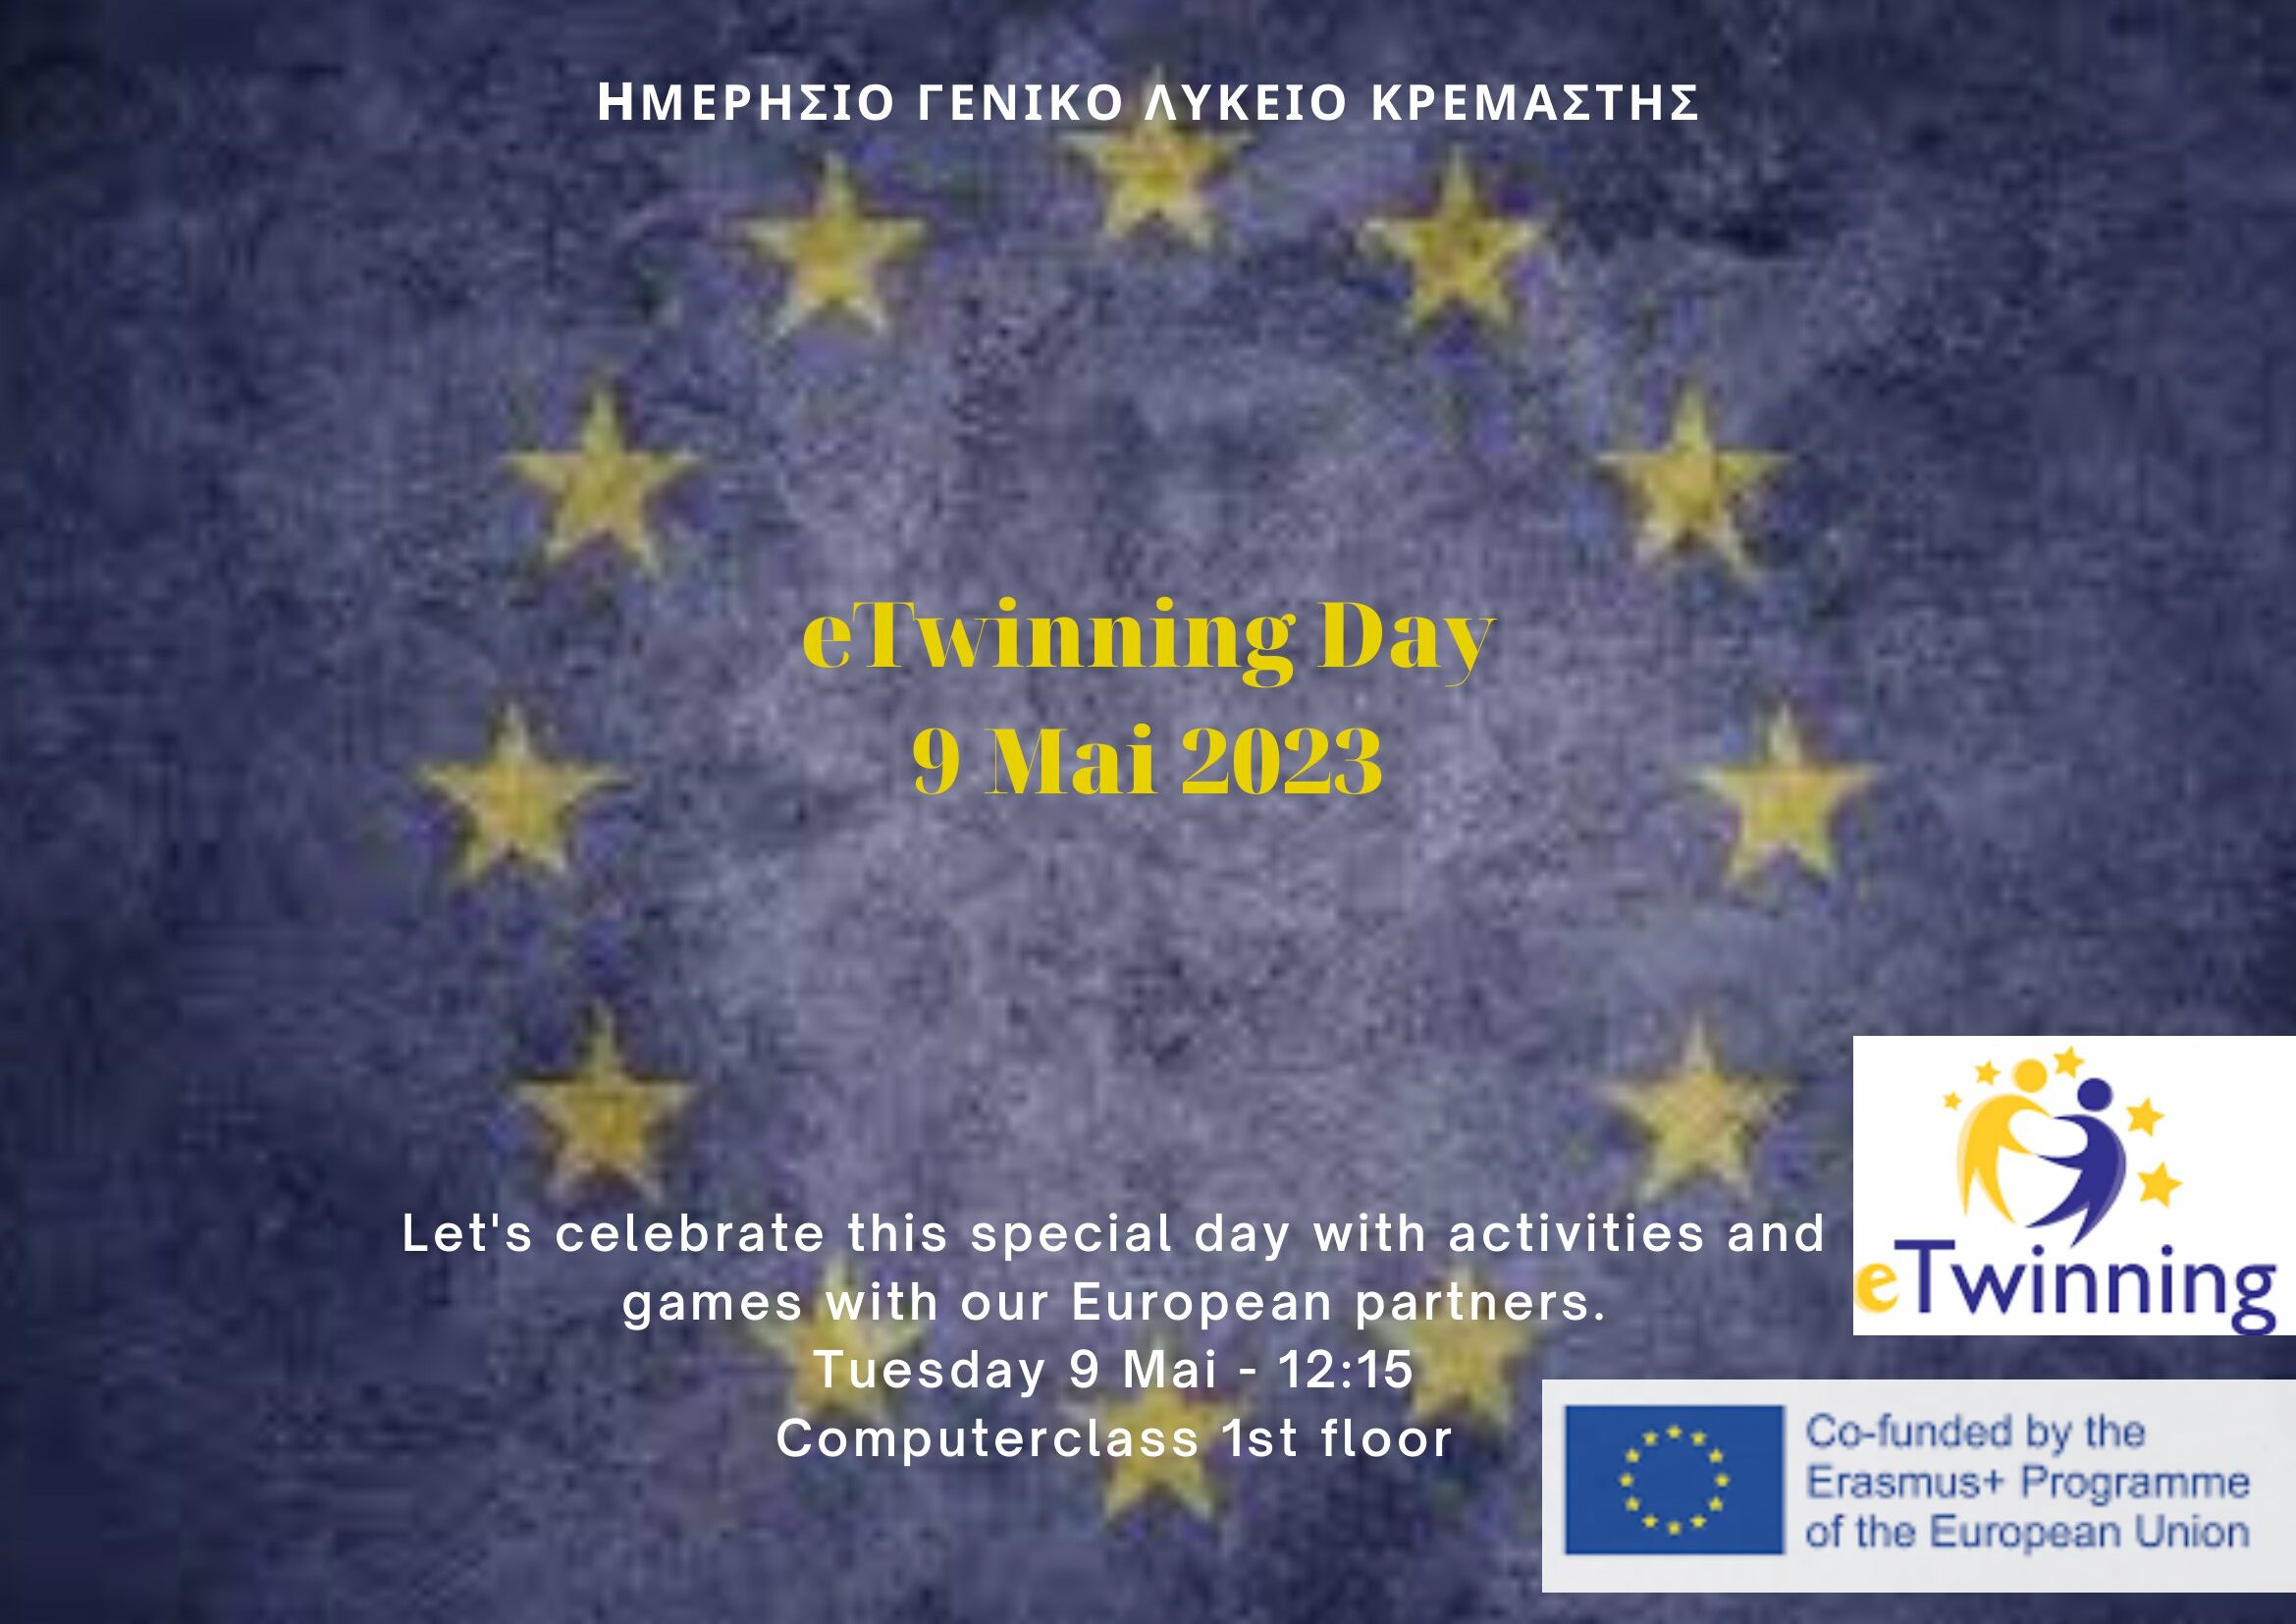 Hμέρα e-Twinning 9 Μαίου 2023